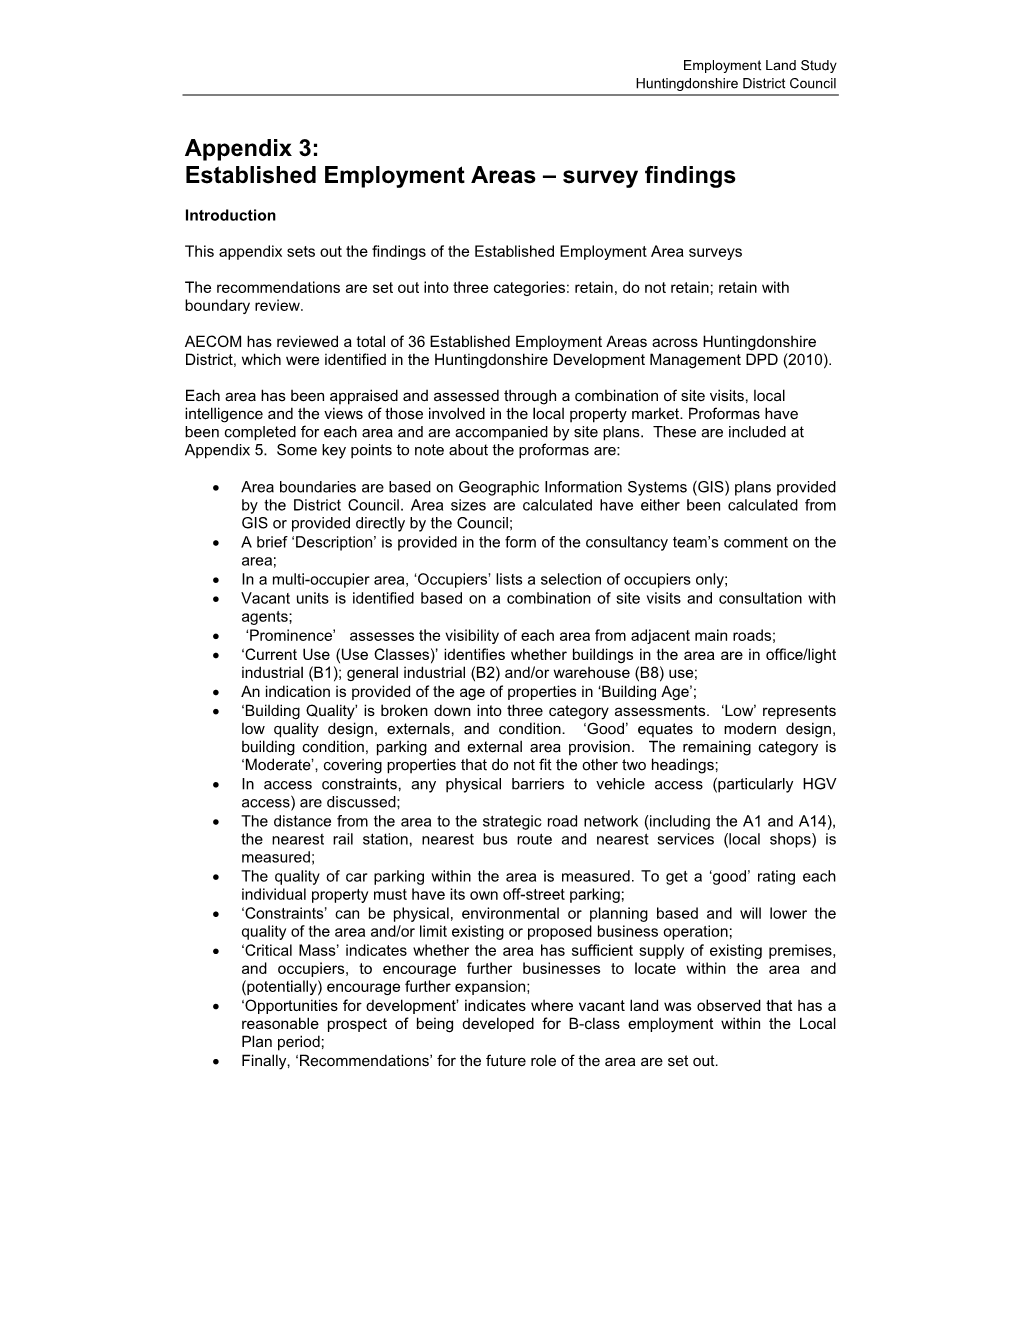 Employment Land Study Appendix 3 to 4